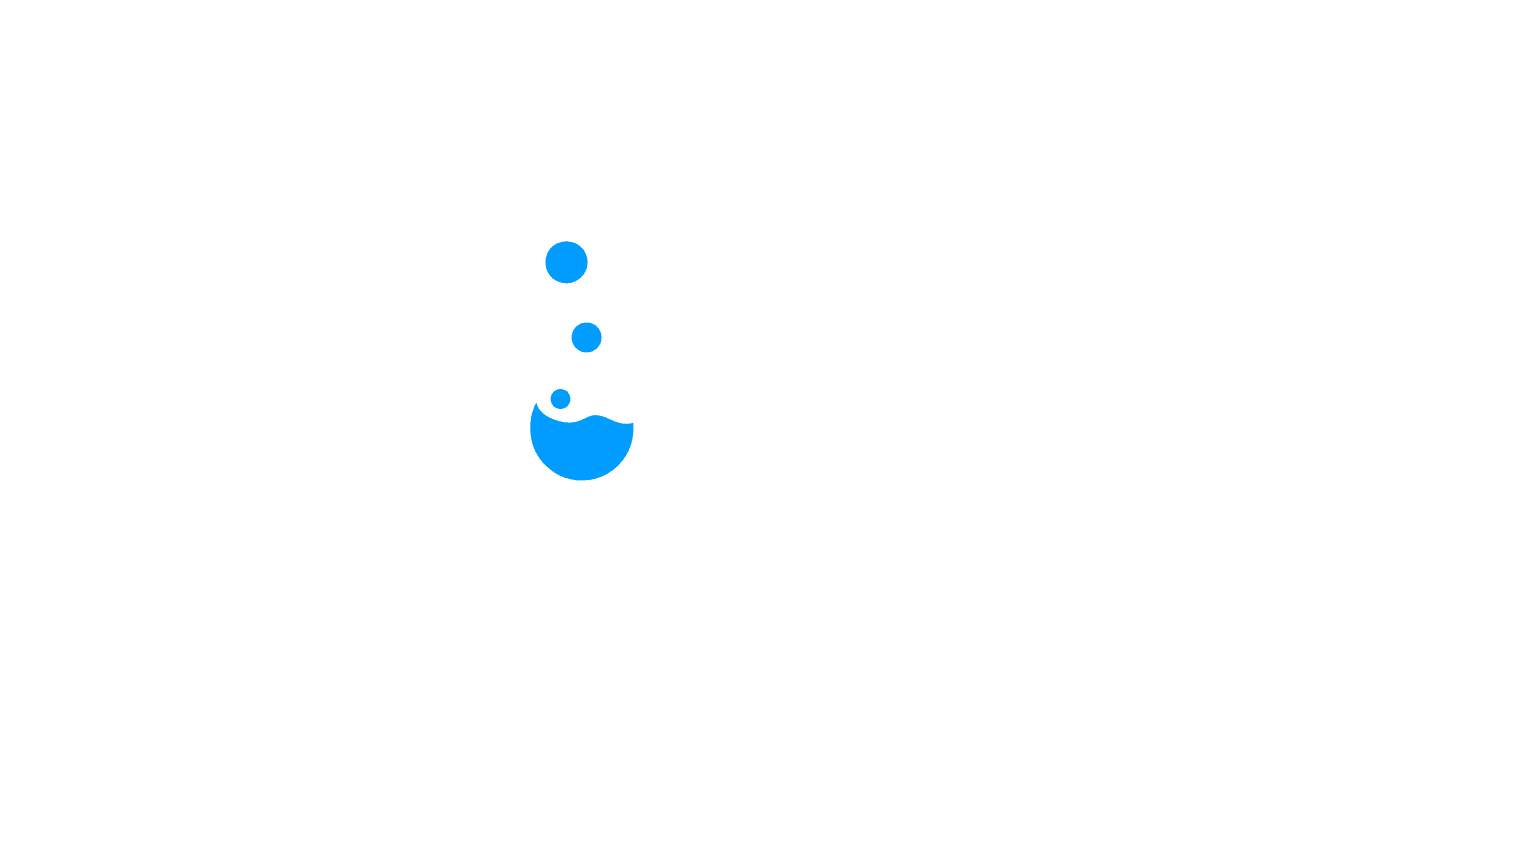 The Wholesale Formula